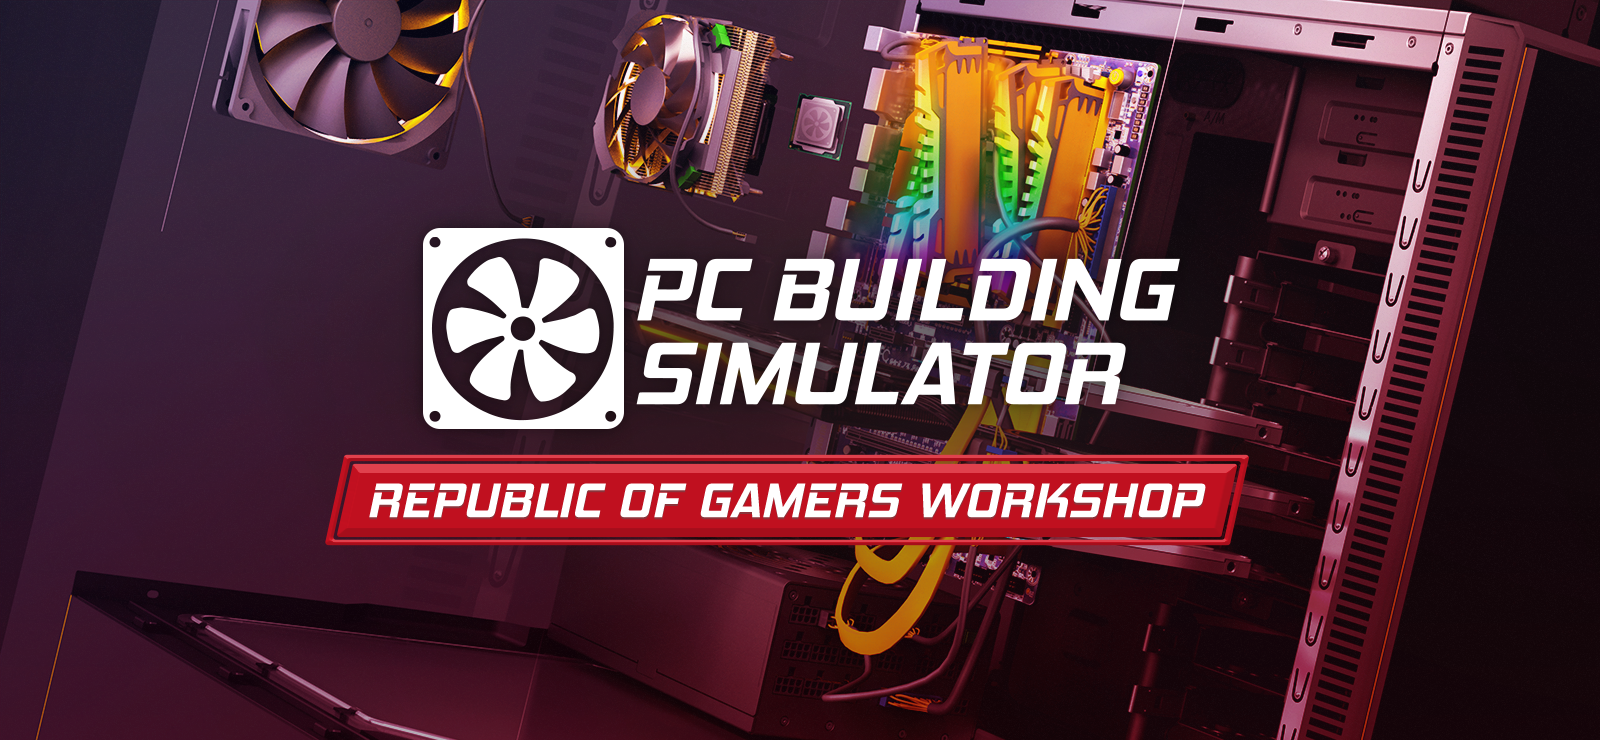 PC Building Simulator - Republic Of Gamers Workshop